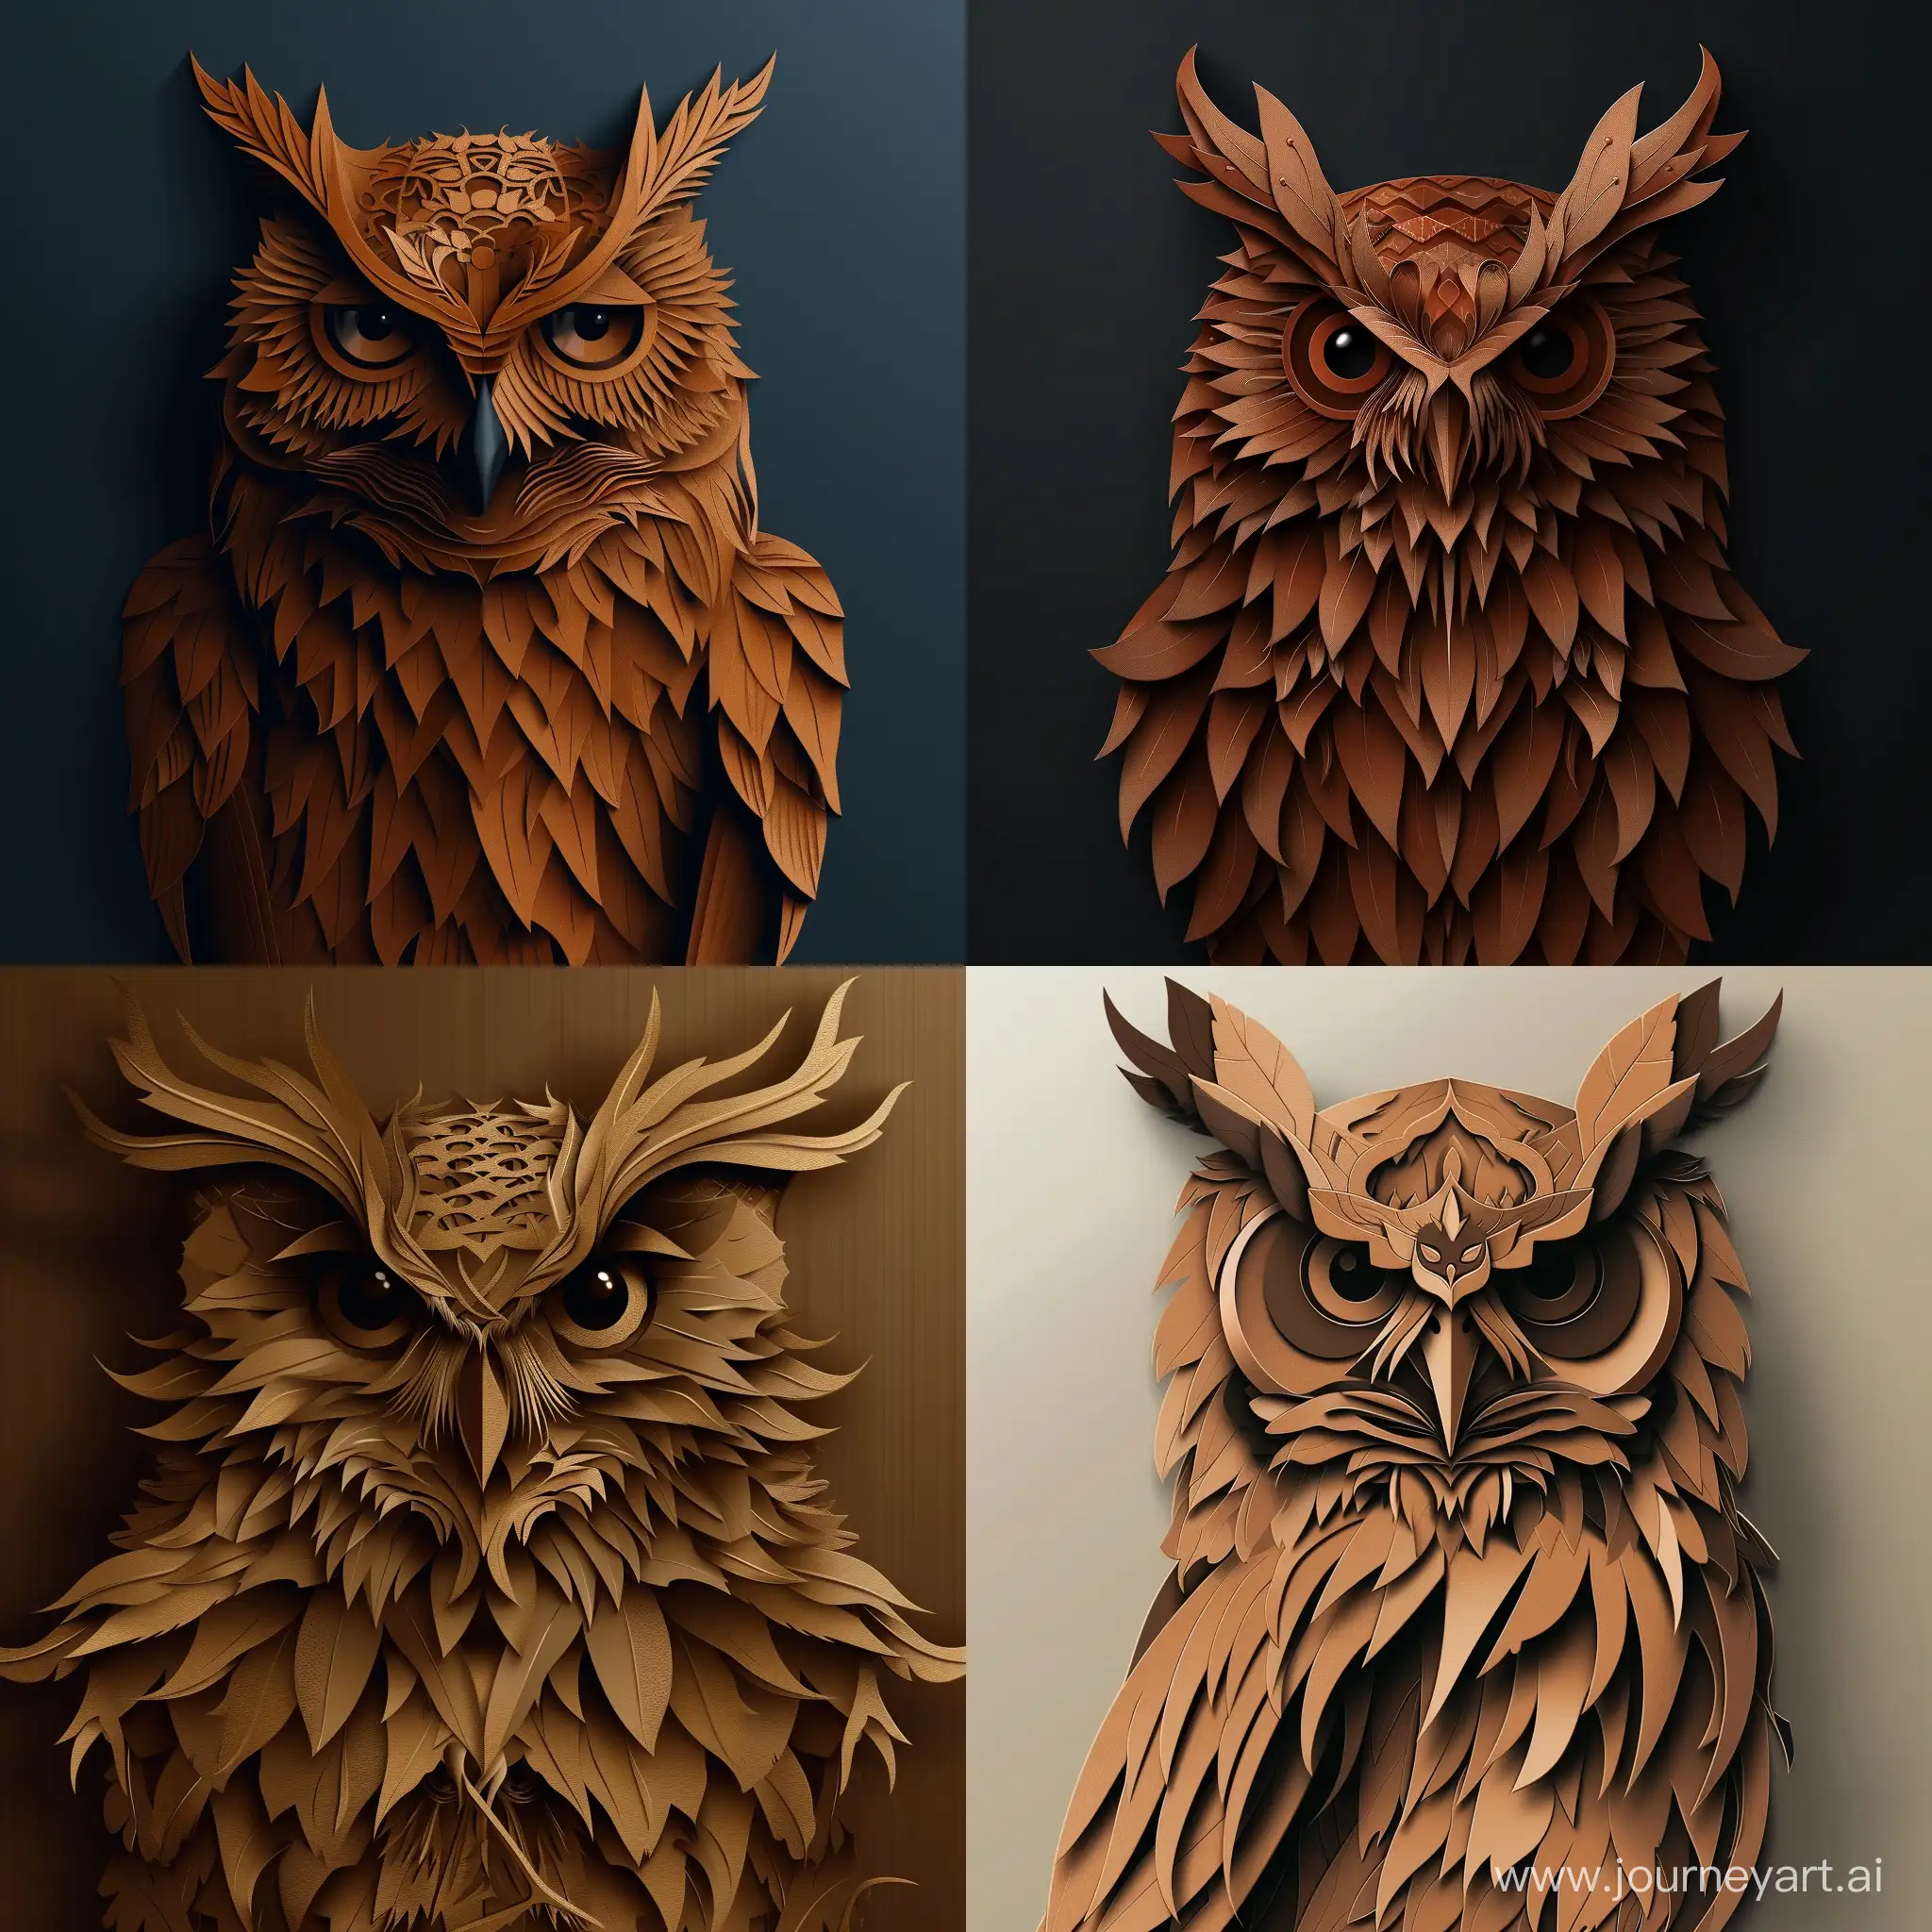 Majestic-Owl-Art-Regal-Brown-Owl-with-Wisdom-Symbolizing-Crown